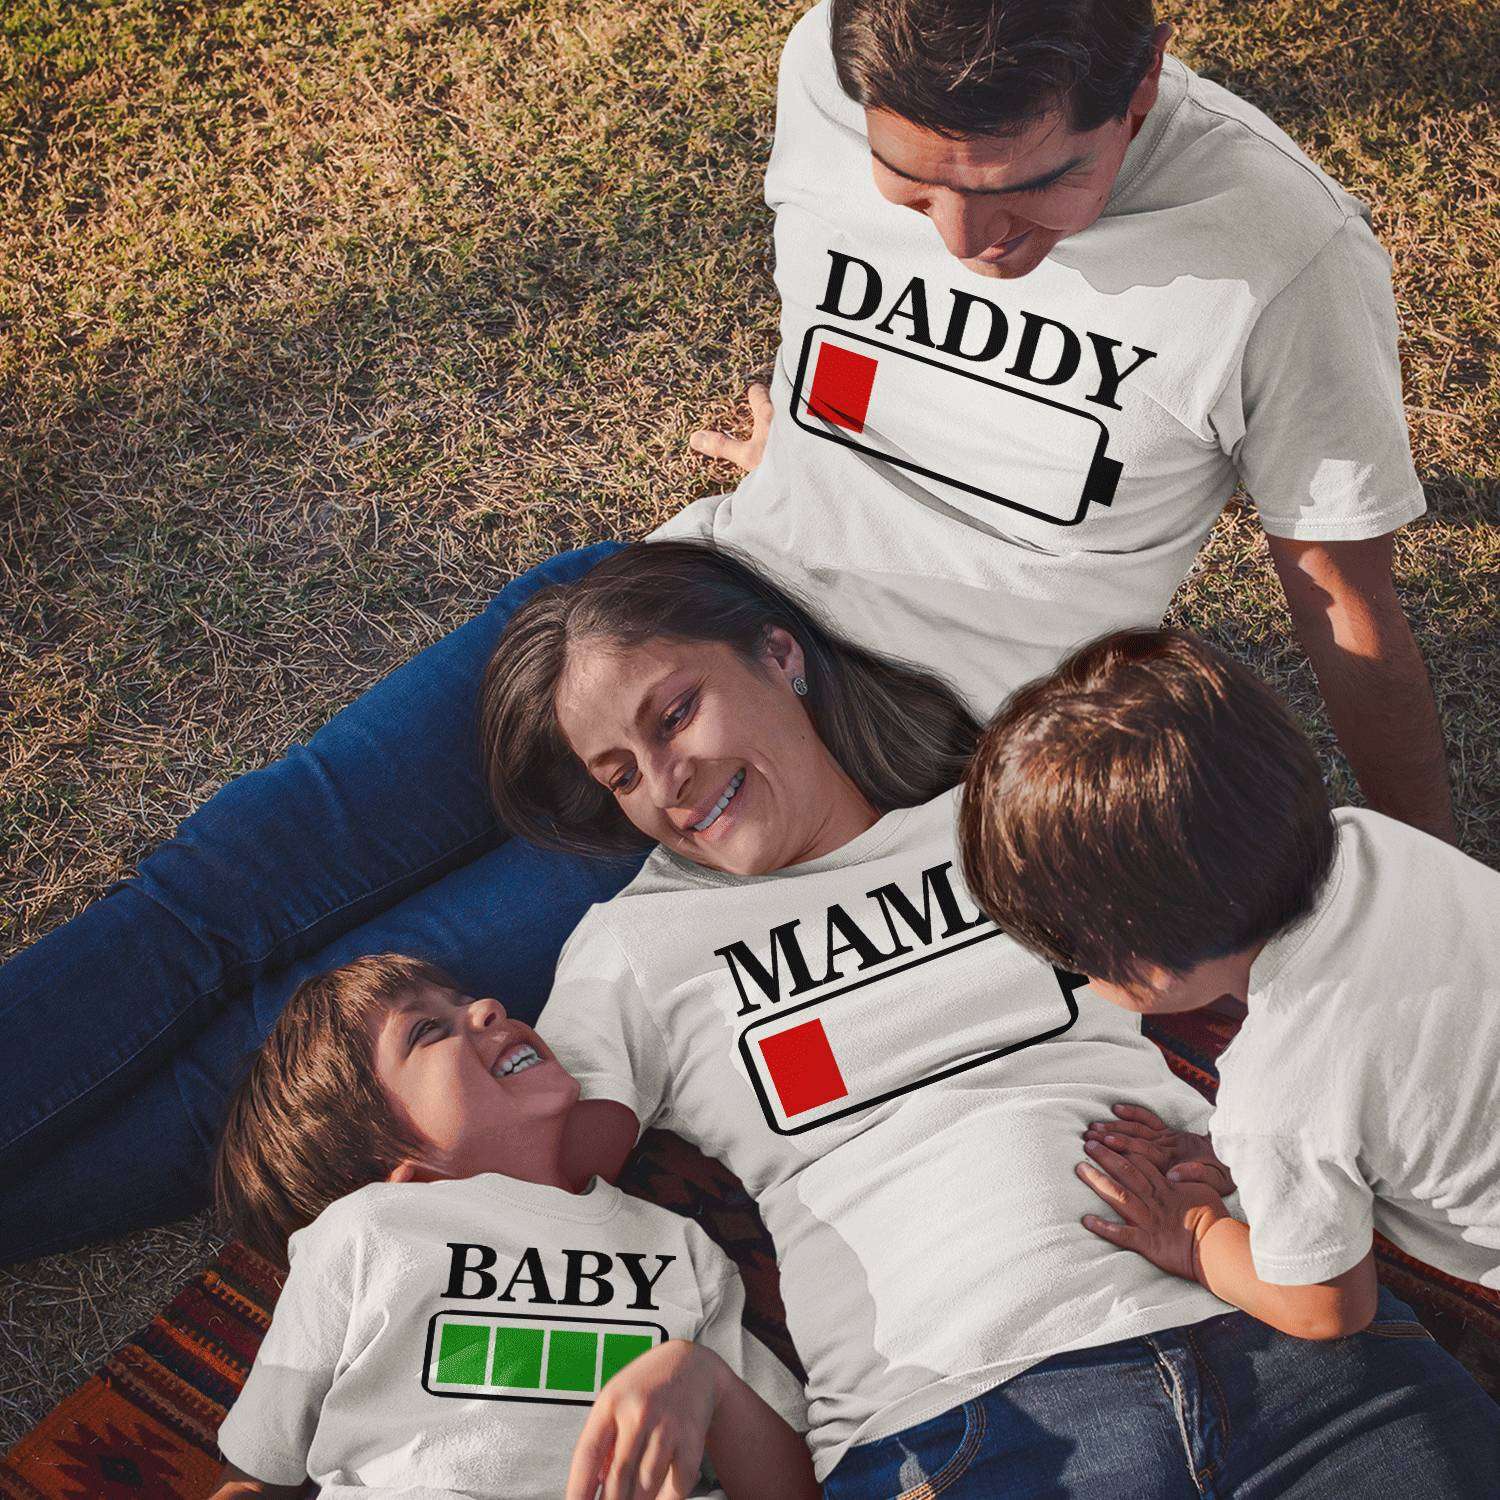 Matching Father Daughter Shirts, My Heart Belongs to my Daddy Shirt